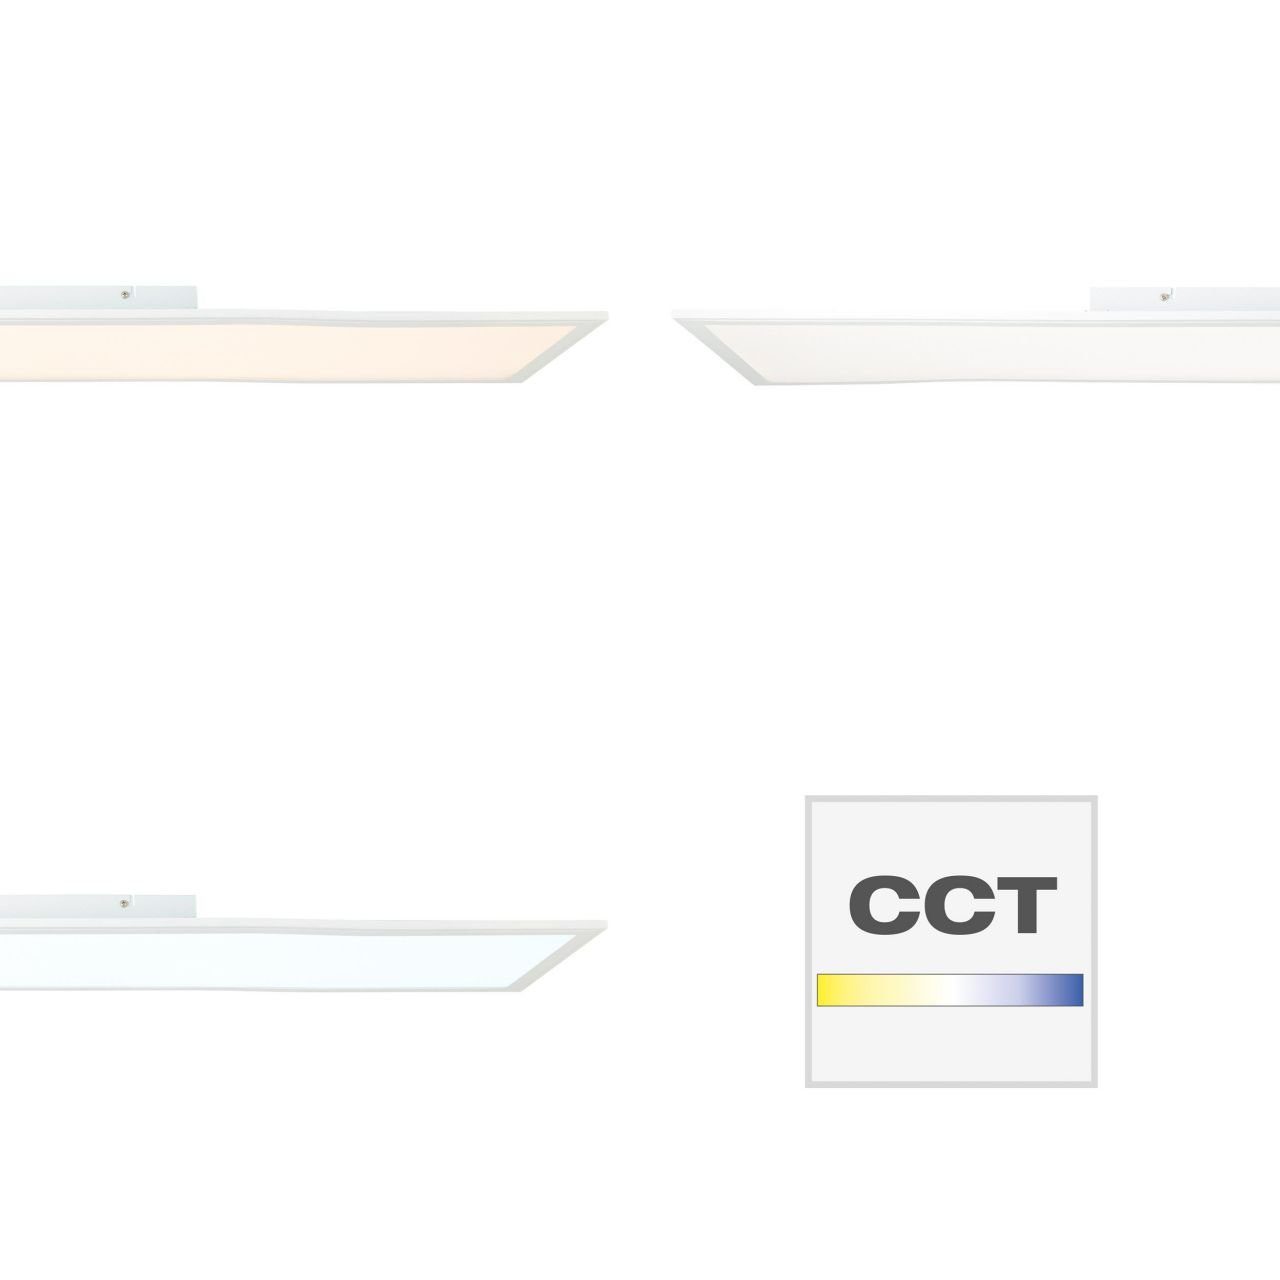 Brilliant LED Panel Abie, LED fest integriert, Farbwechsler, 120 x 30 cm,  dimmbar, CCT, RGB, 3800 lm, Fernbedienung, weiß | Panels